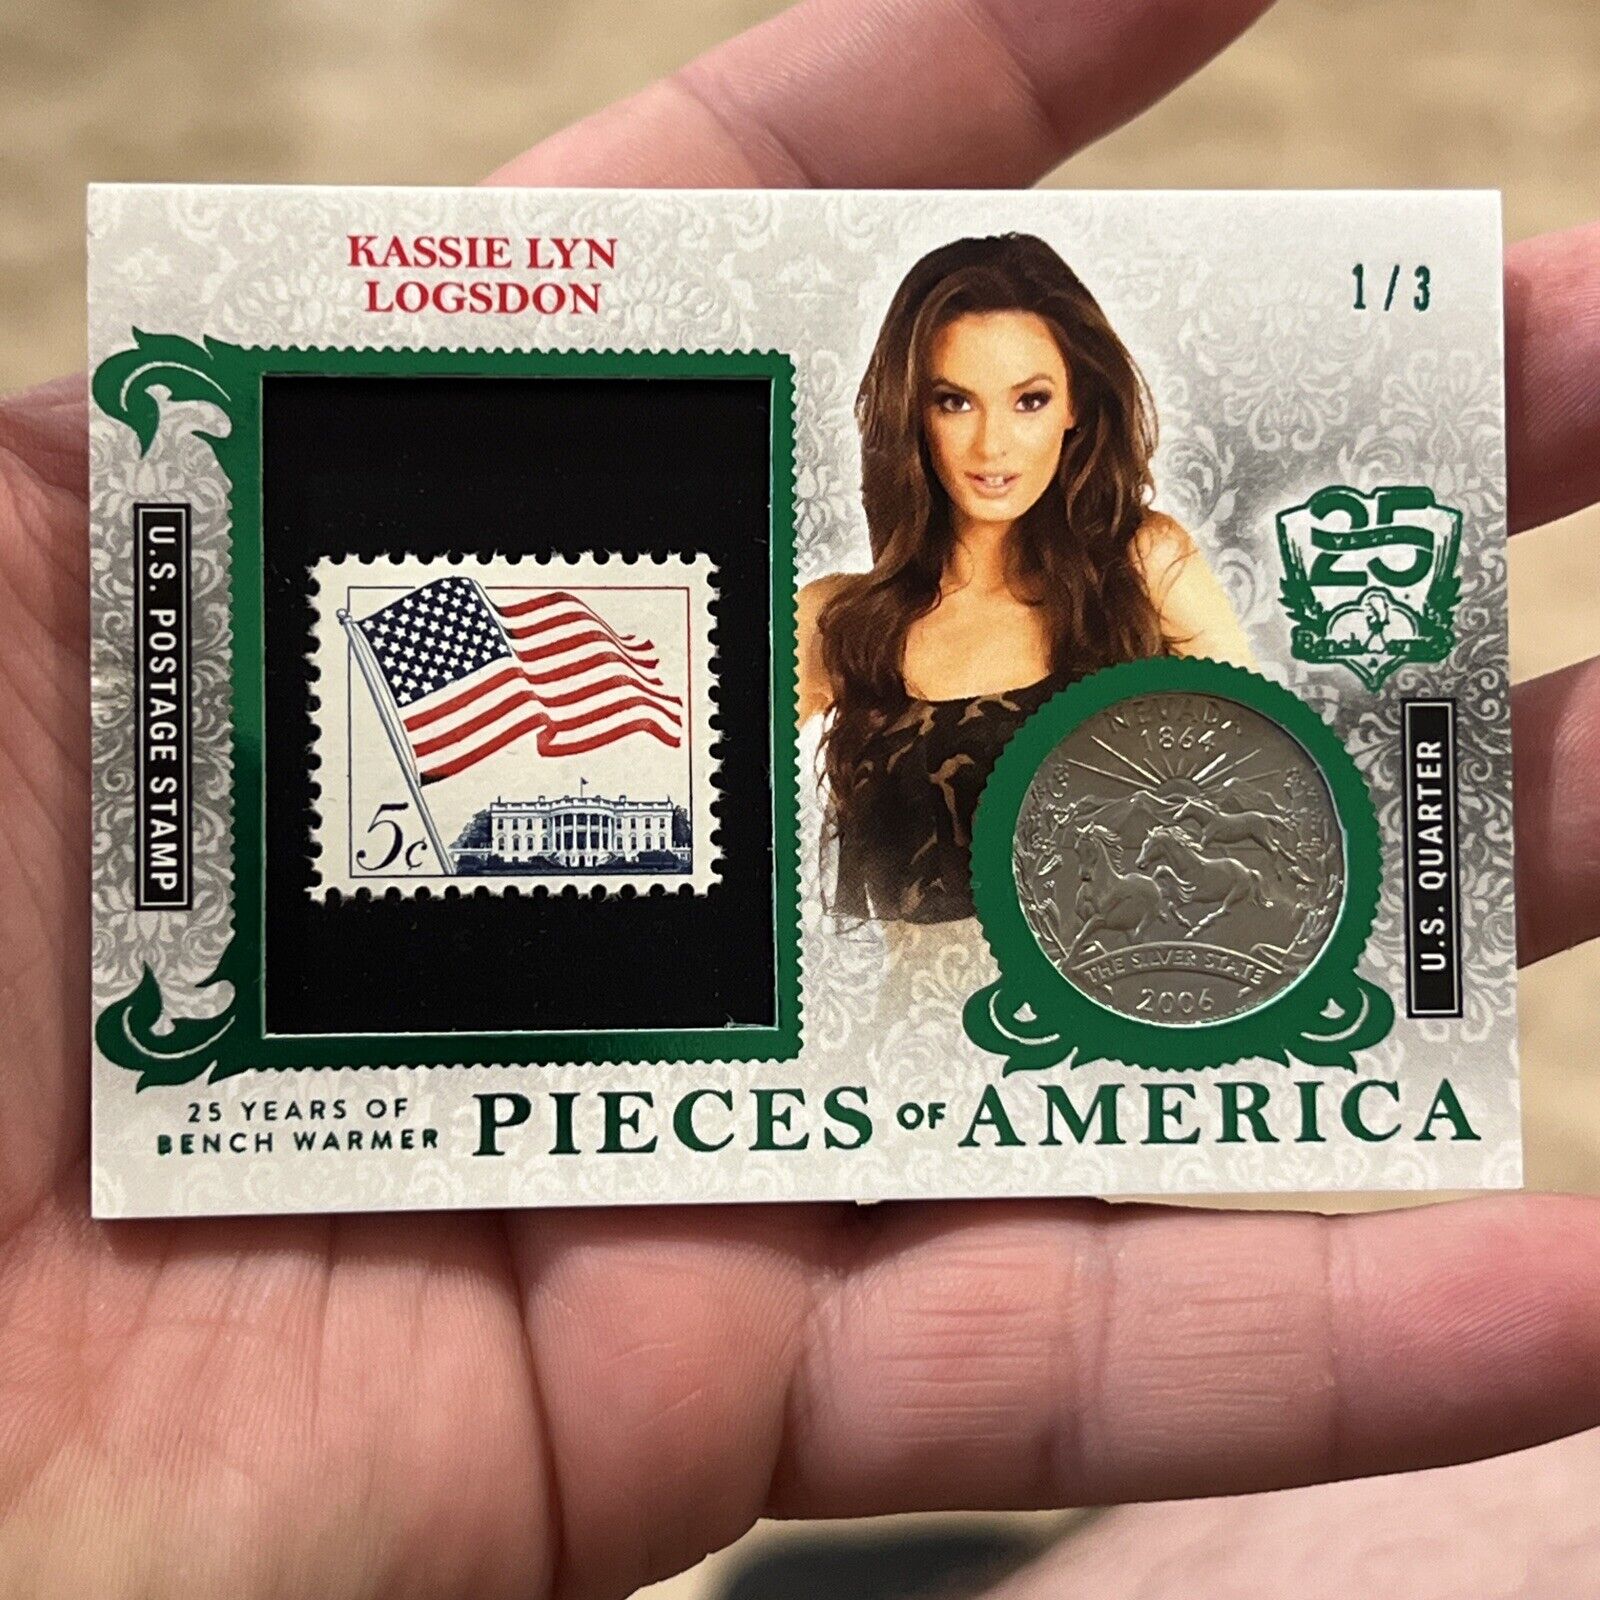 2019 Bench Warmer Pieces of America KASSIE LYN LOGSDON Postage Stamp Quarter 1/3